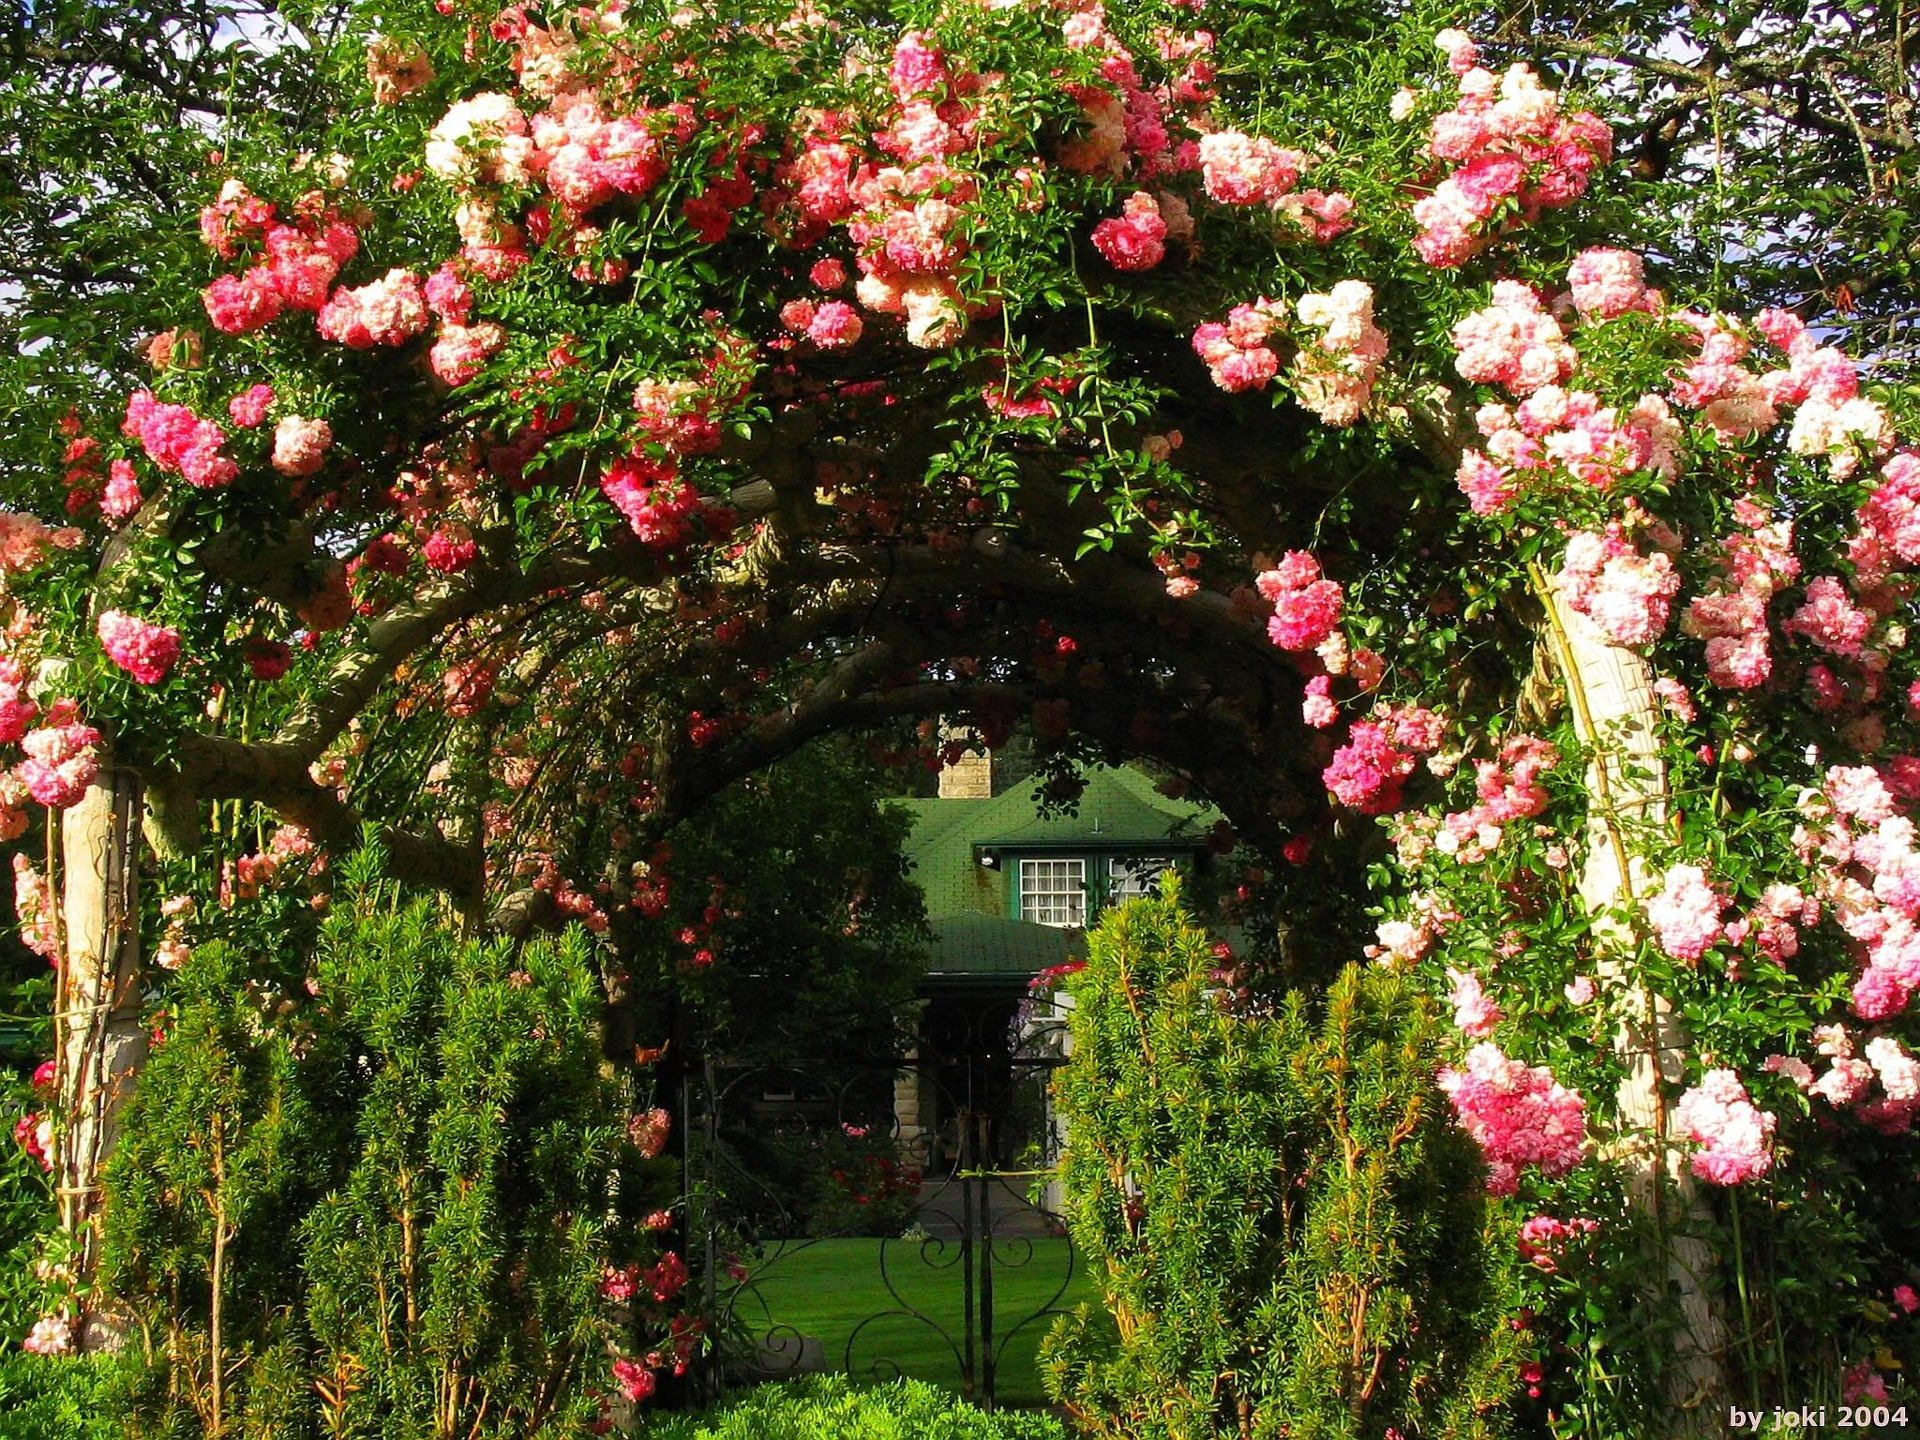 garden, man made, arch, house, pink rose, rose bush